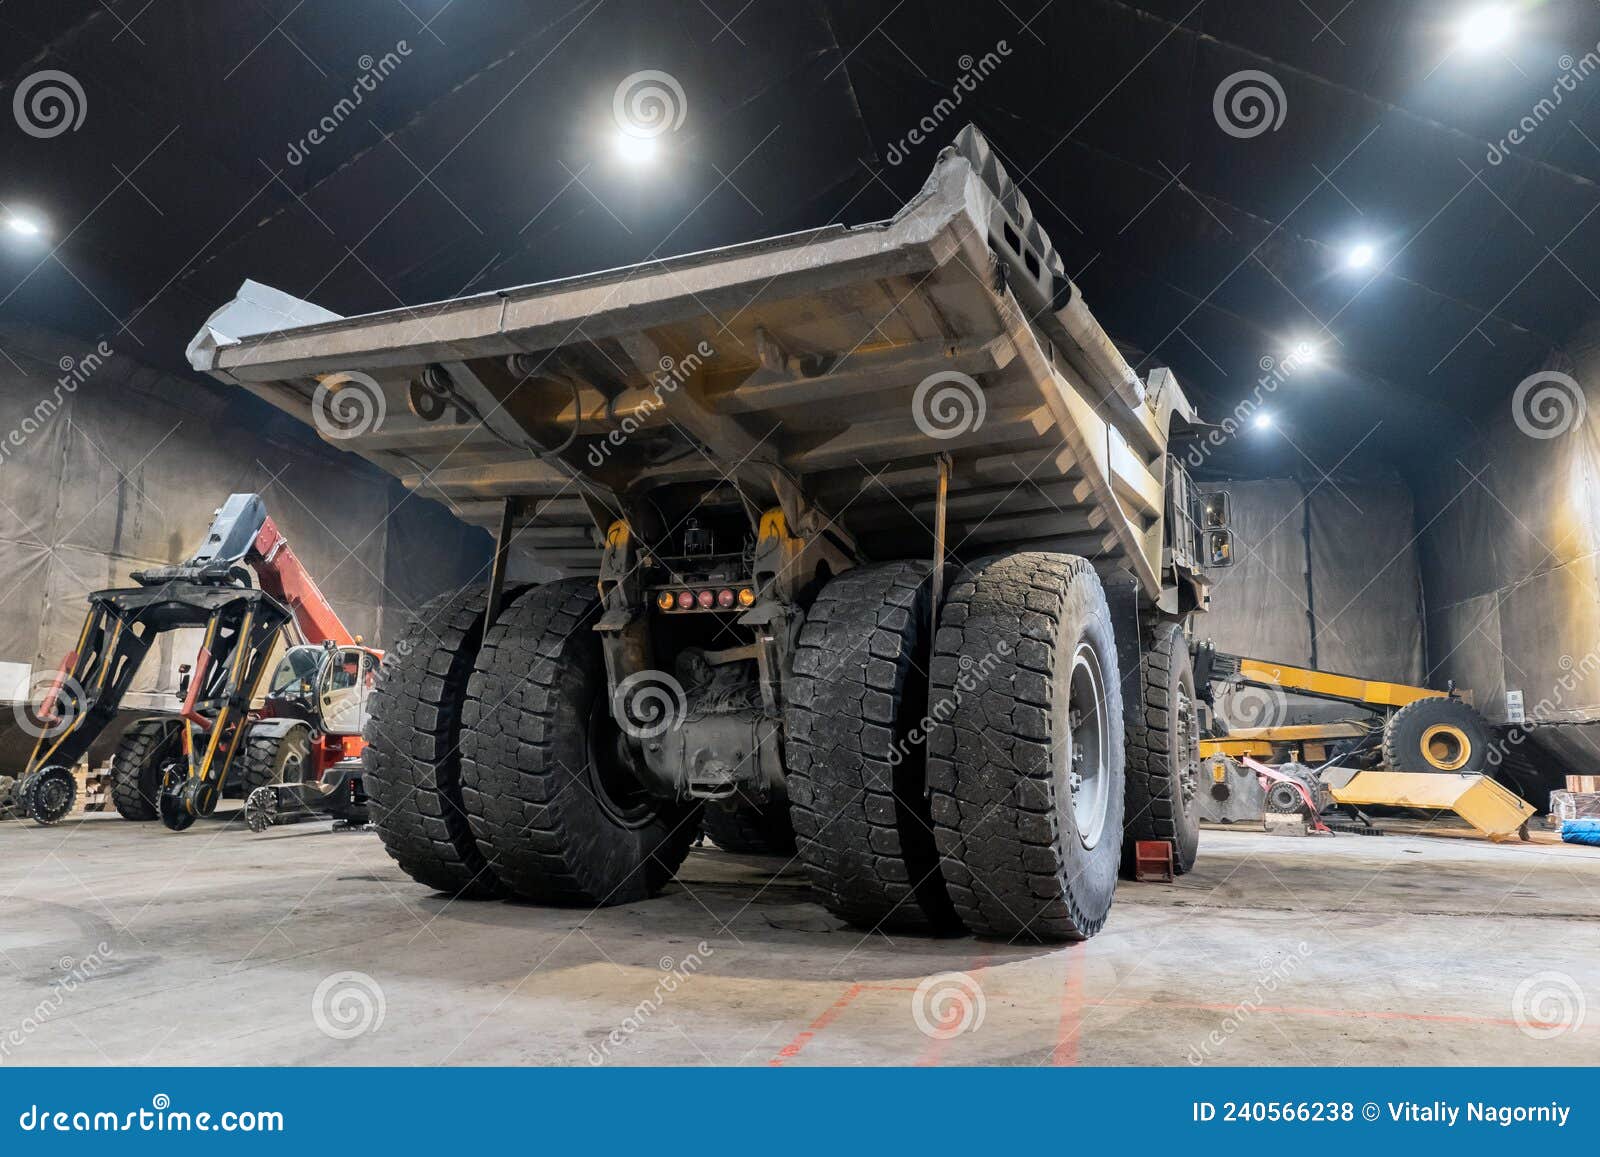 dump truck is serviced in an industrial garage.